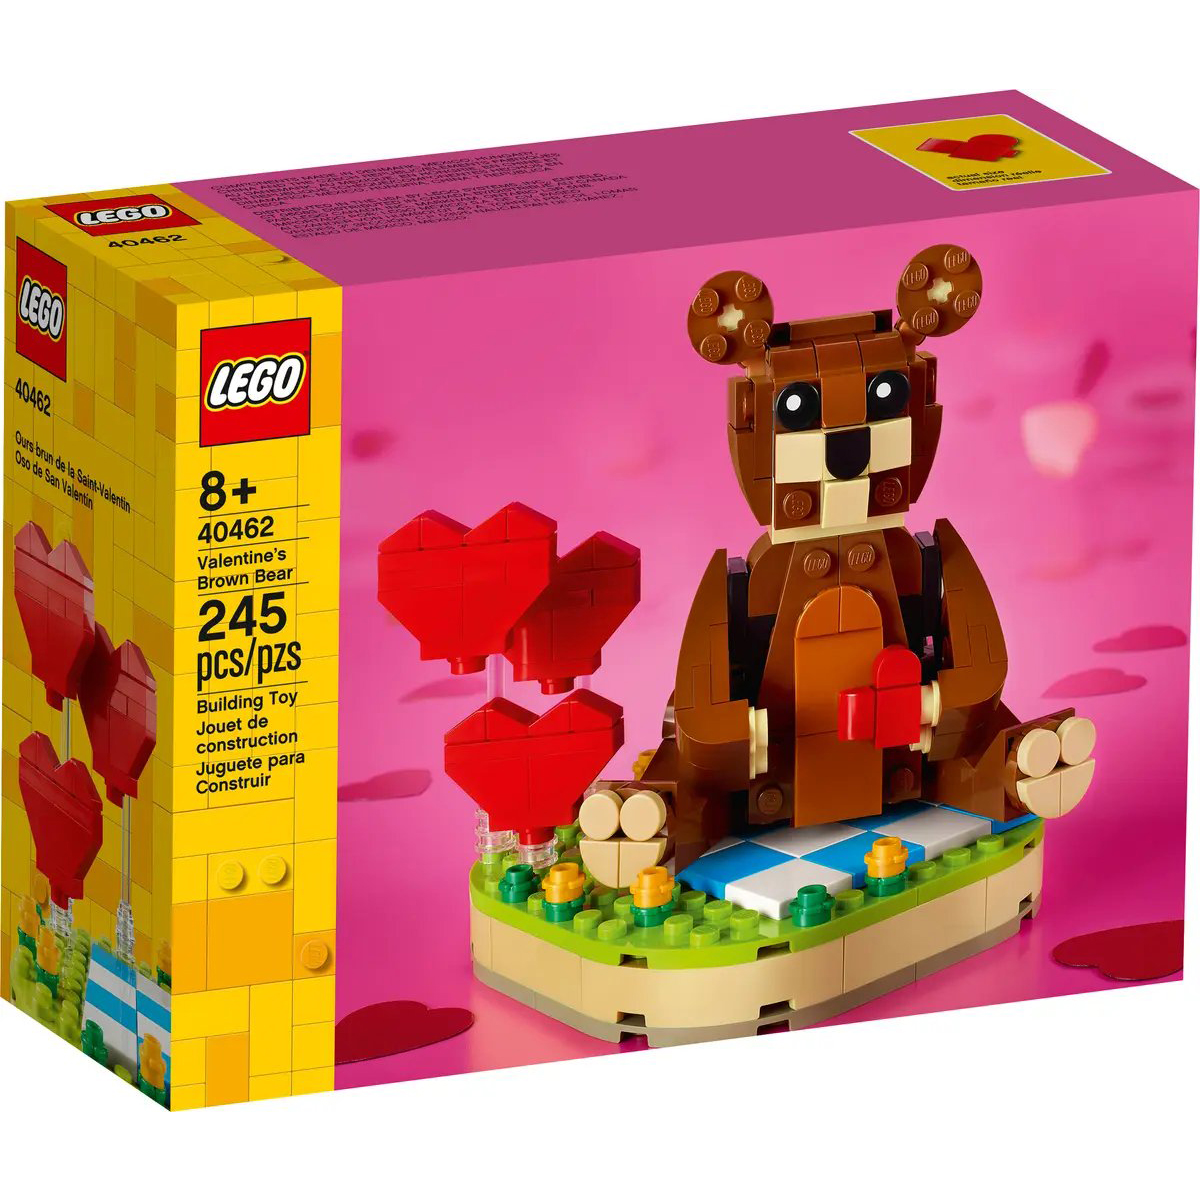 Конструктор Lego Valentine's Brown Bear 40462, 245 деталей